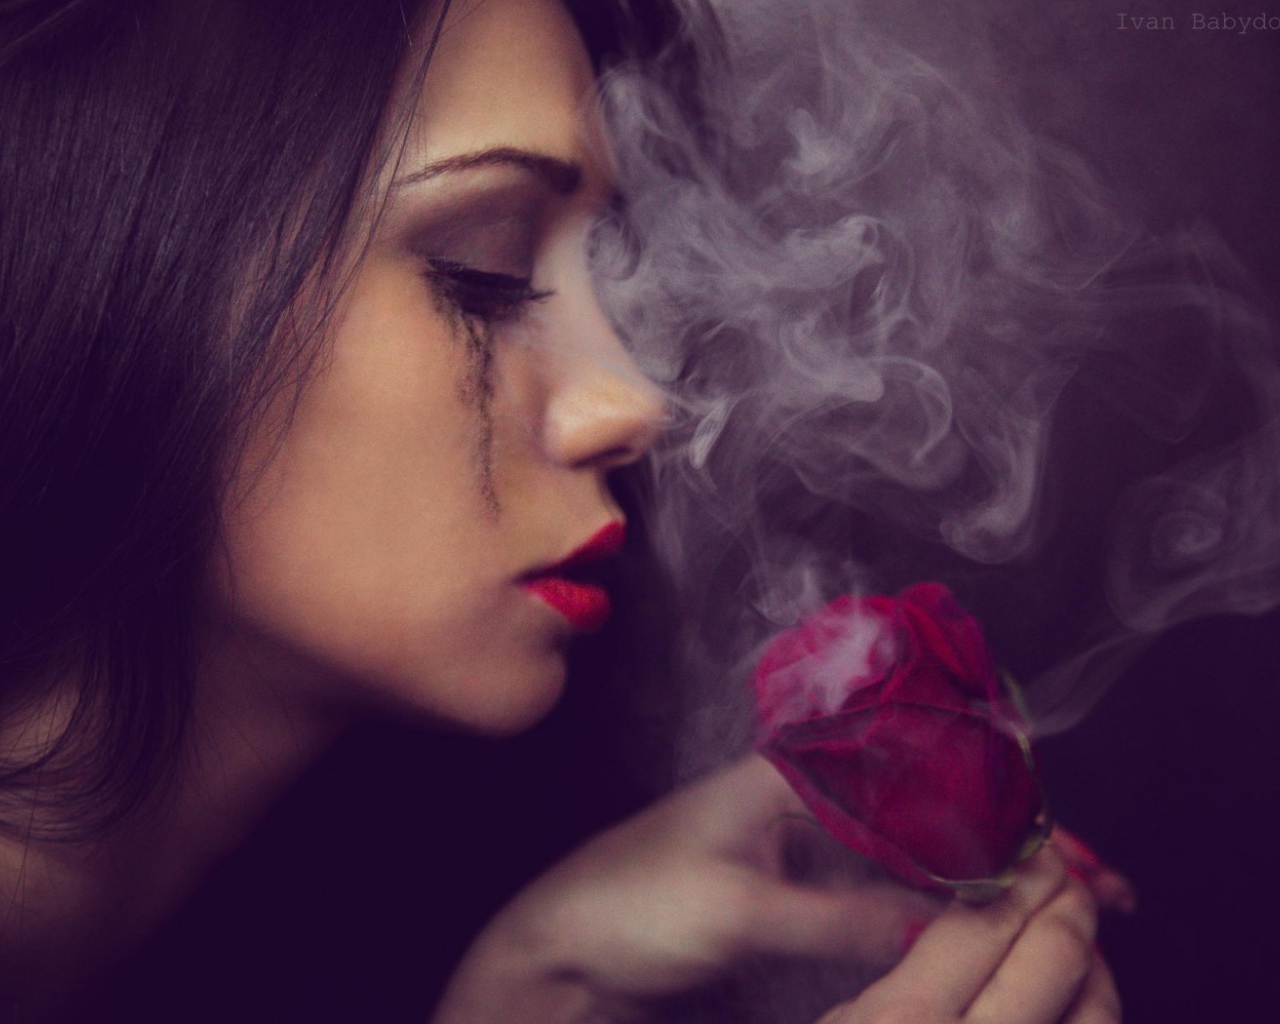 The girl looks at smoking rose